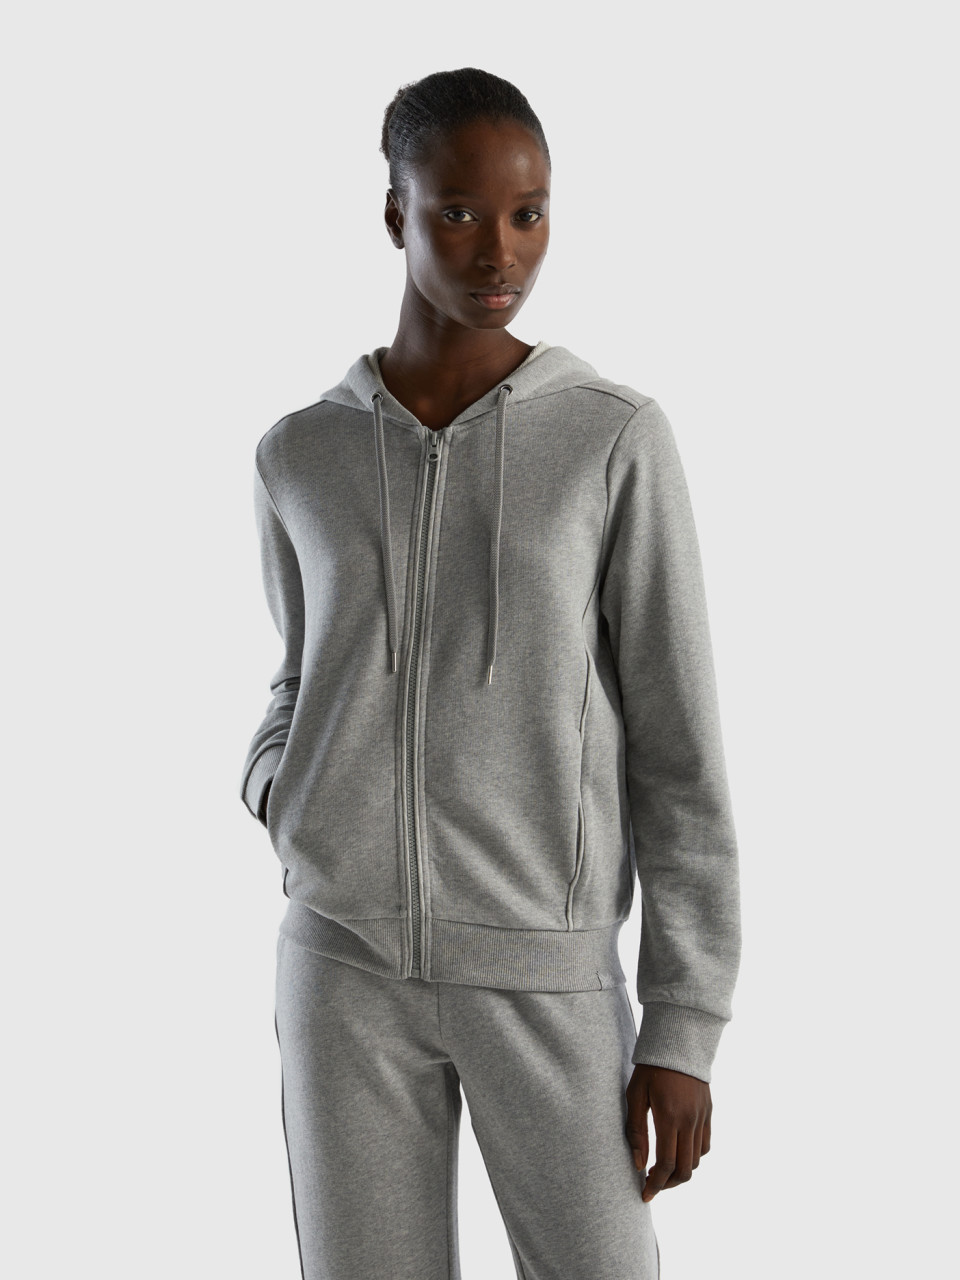 Benetton, 100% Cotton Sweatshirt With Zip And Hood, Light Gray, Women